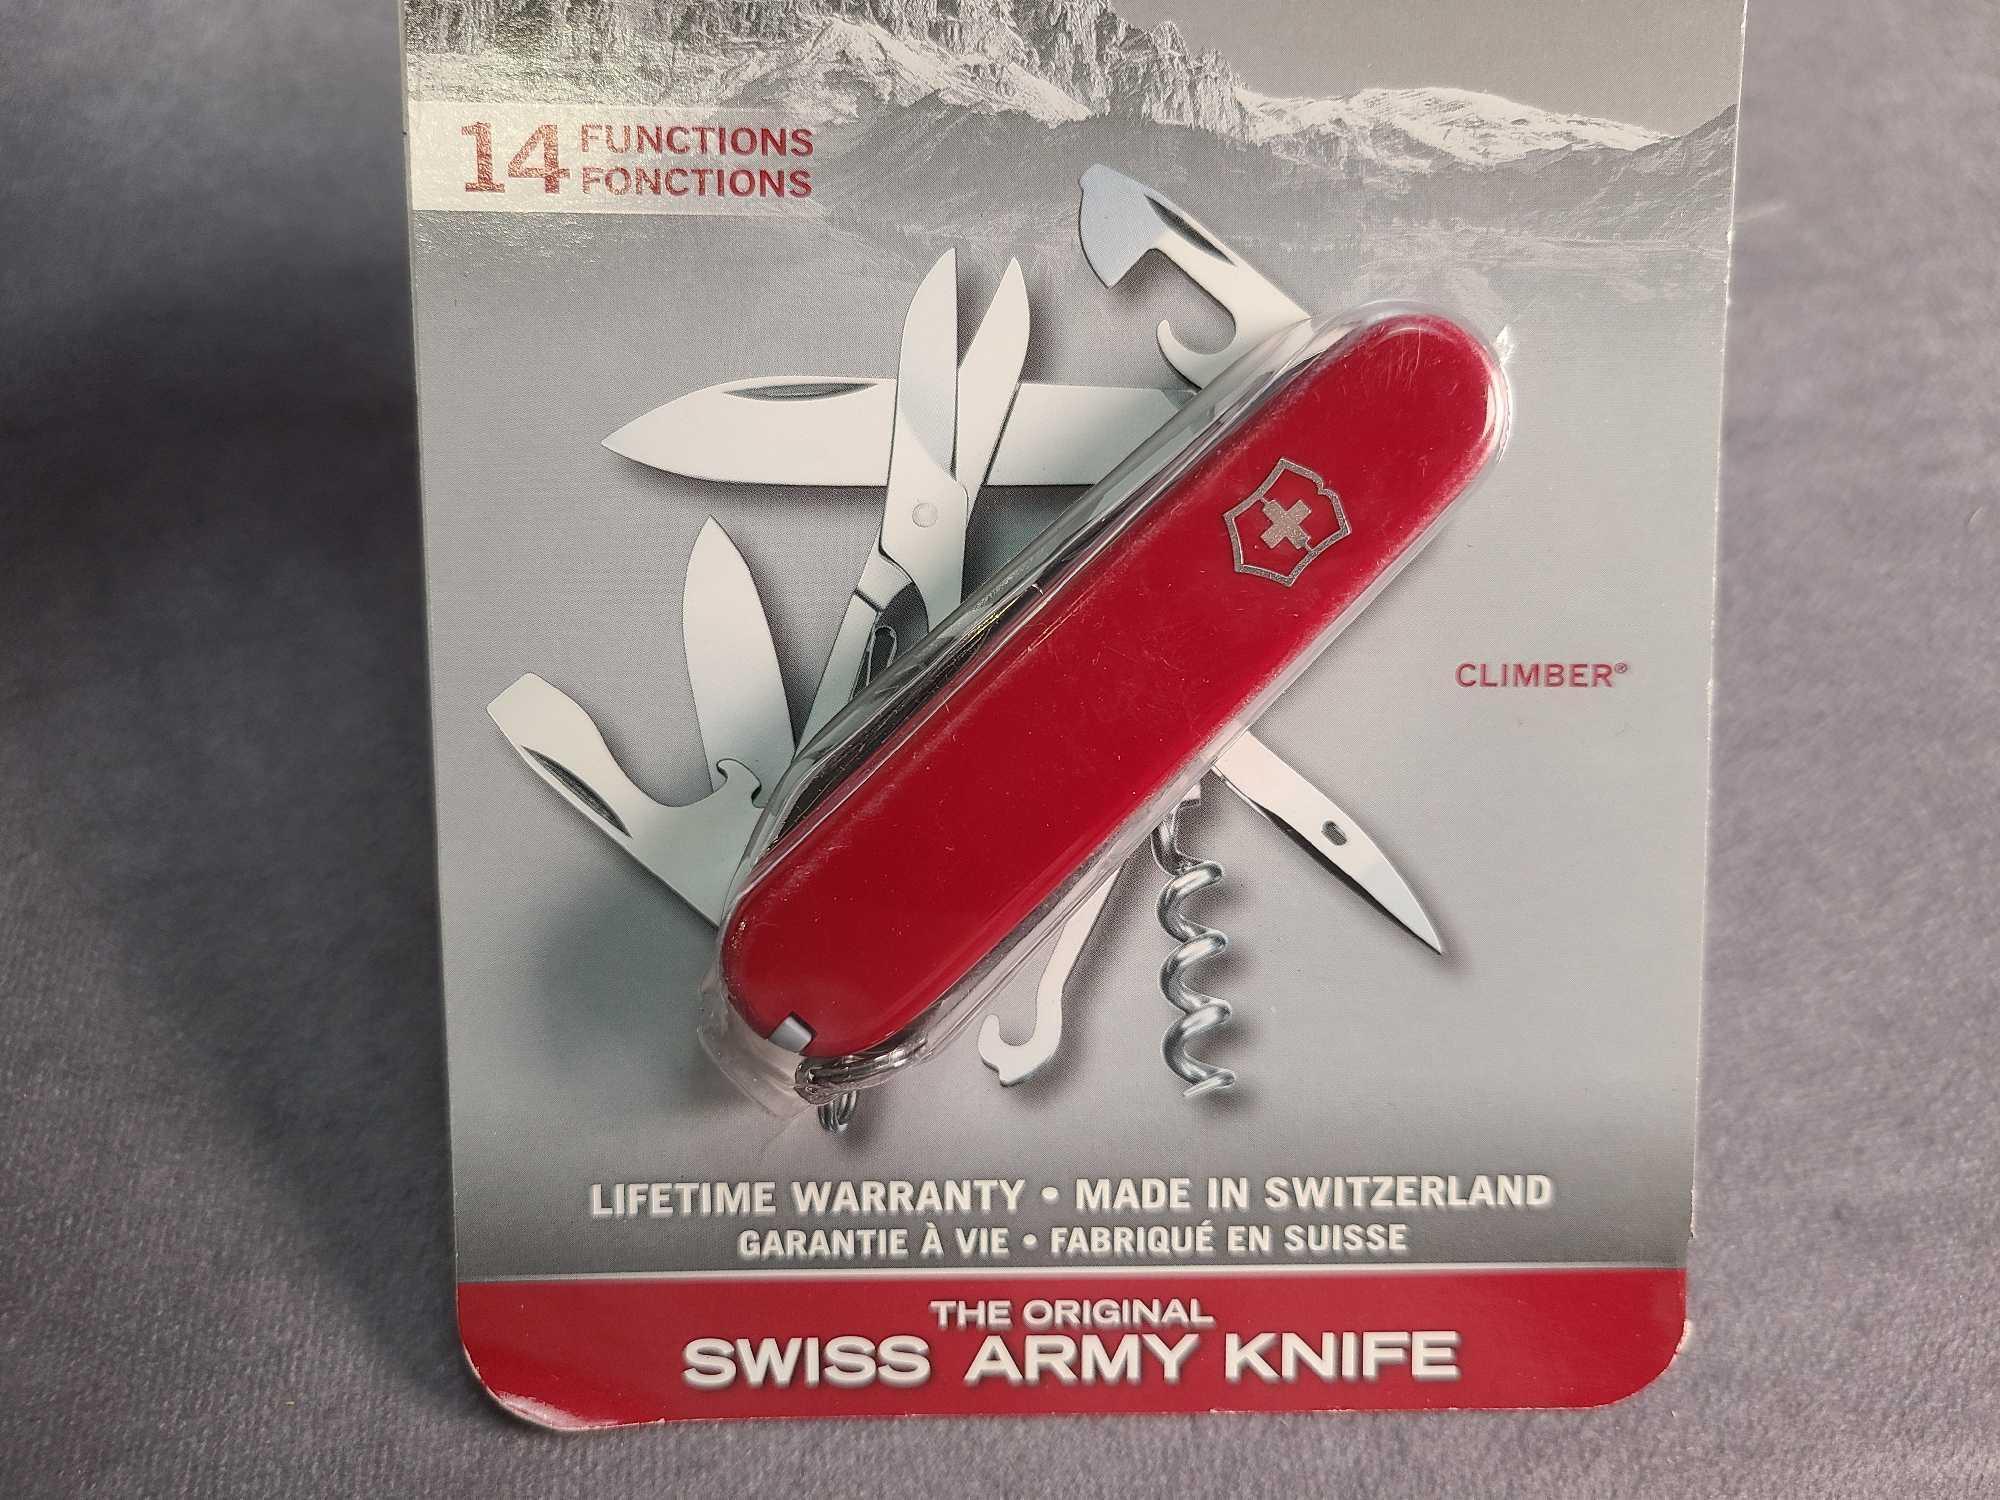 VICTORINOX SWISS ARMY KNIFE CLIMBER